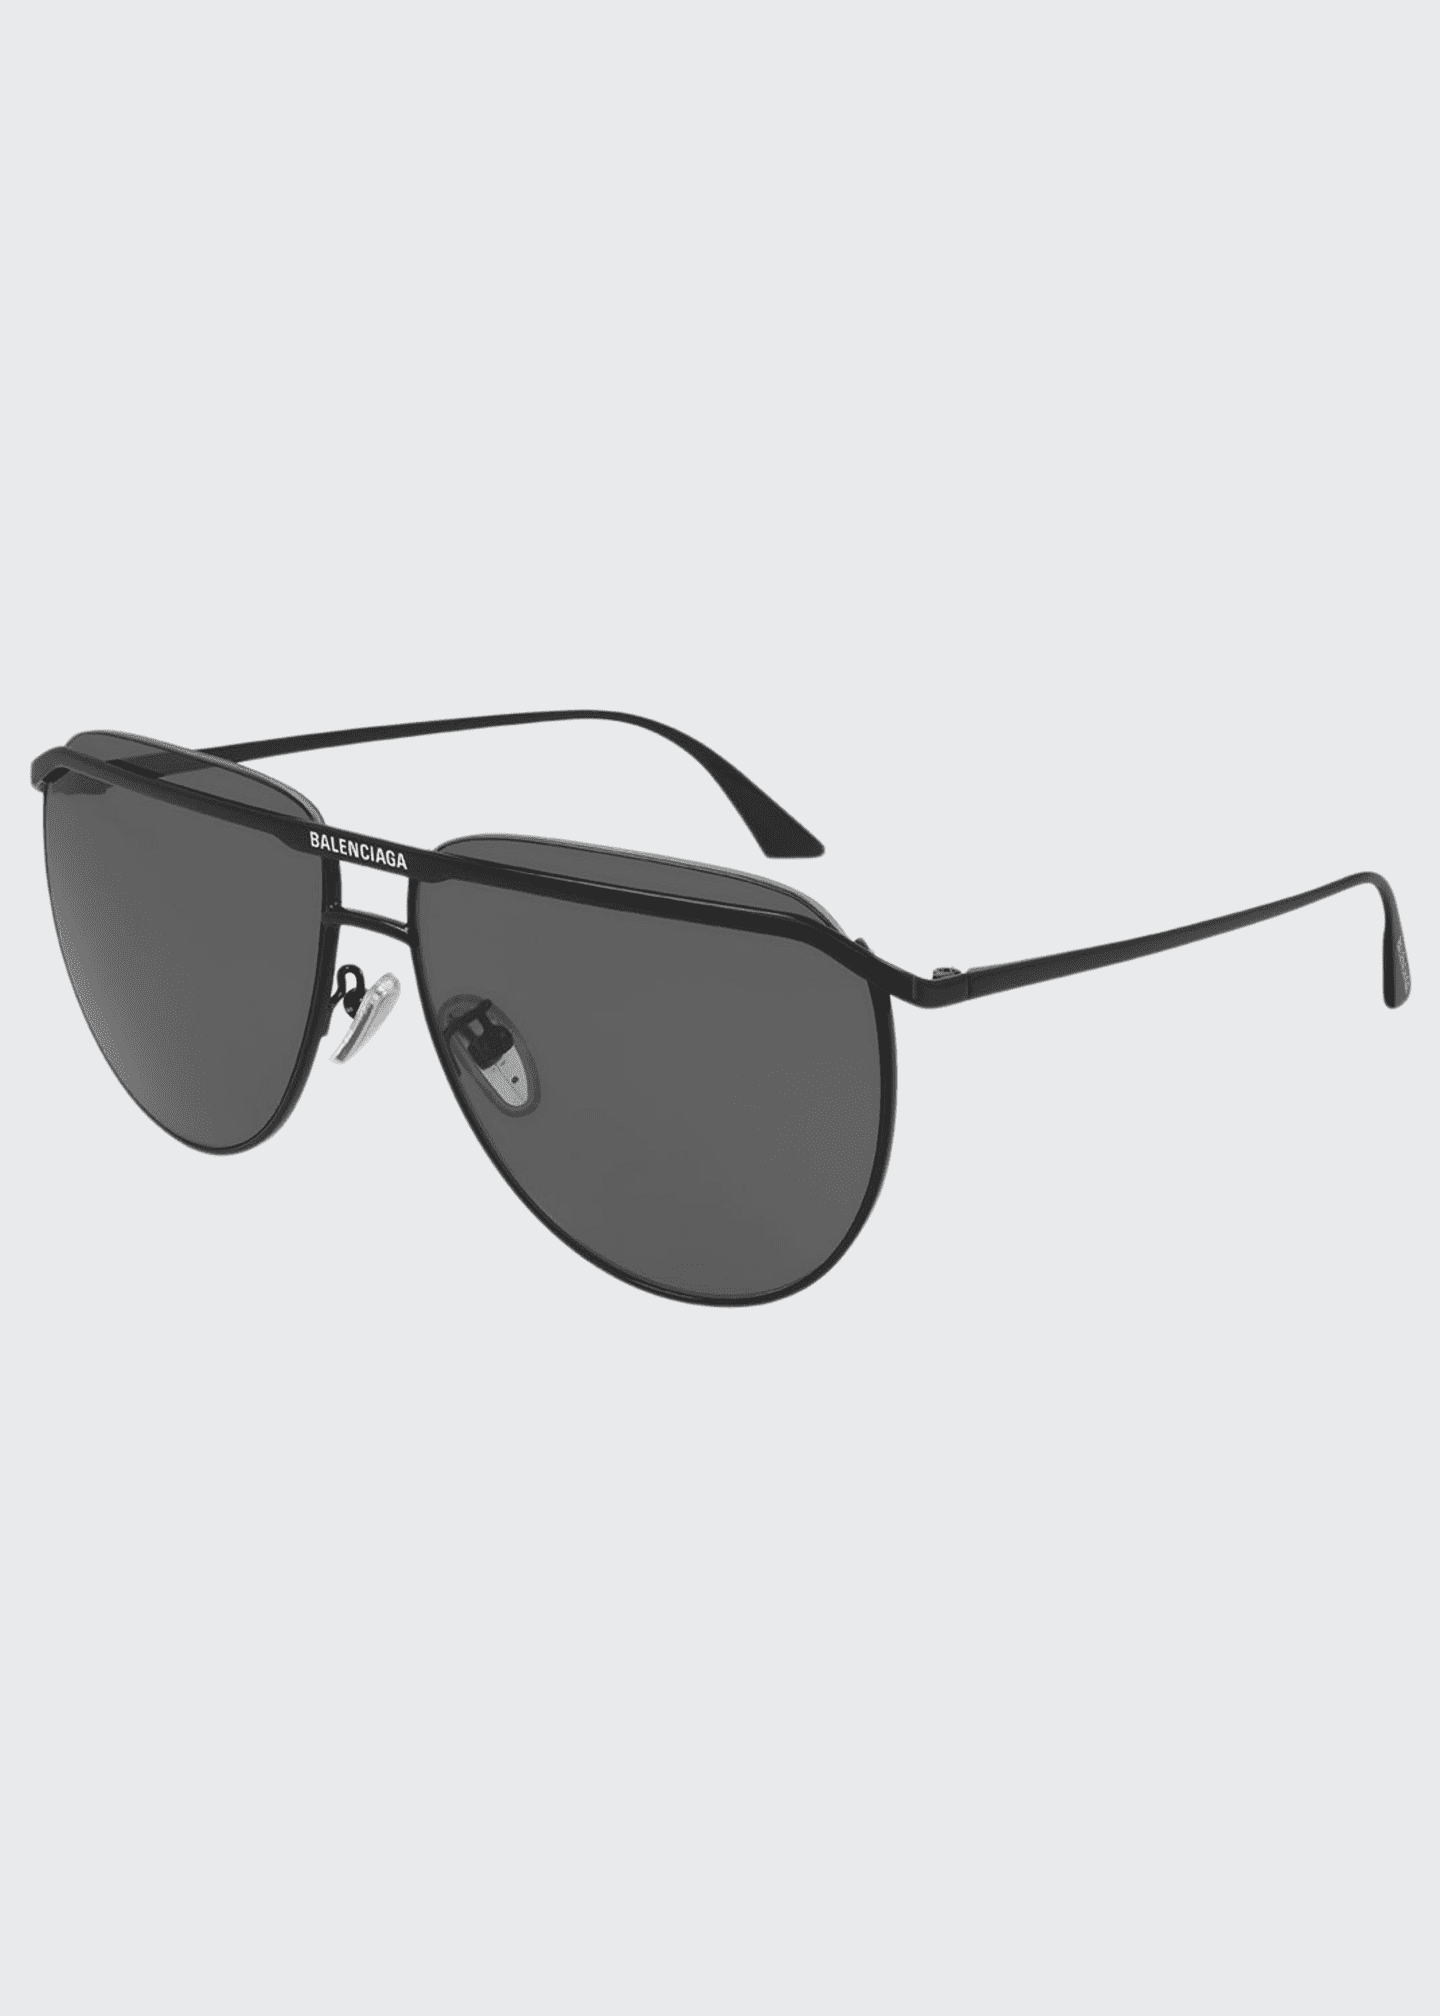 Balenciaga Semi-Rimless Metal Aviator Sunglasses - Bergdorf Goodman